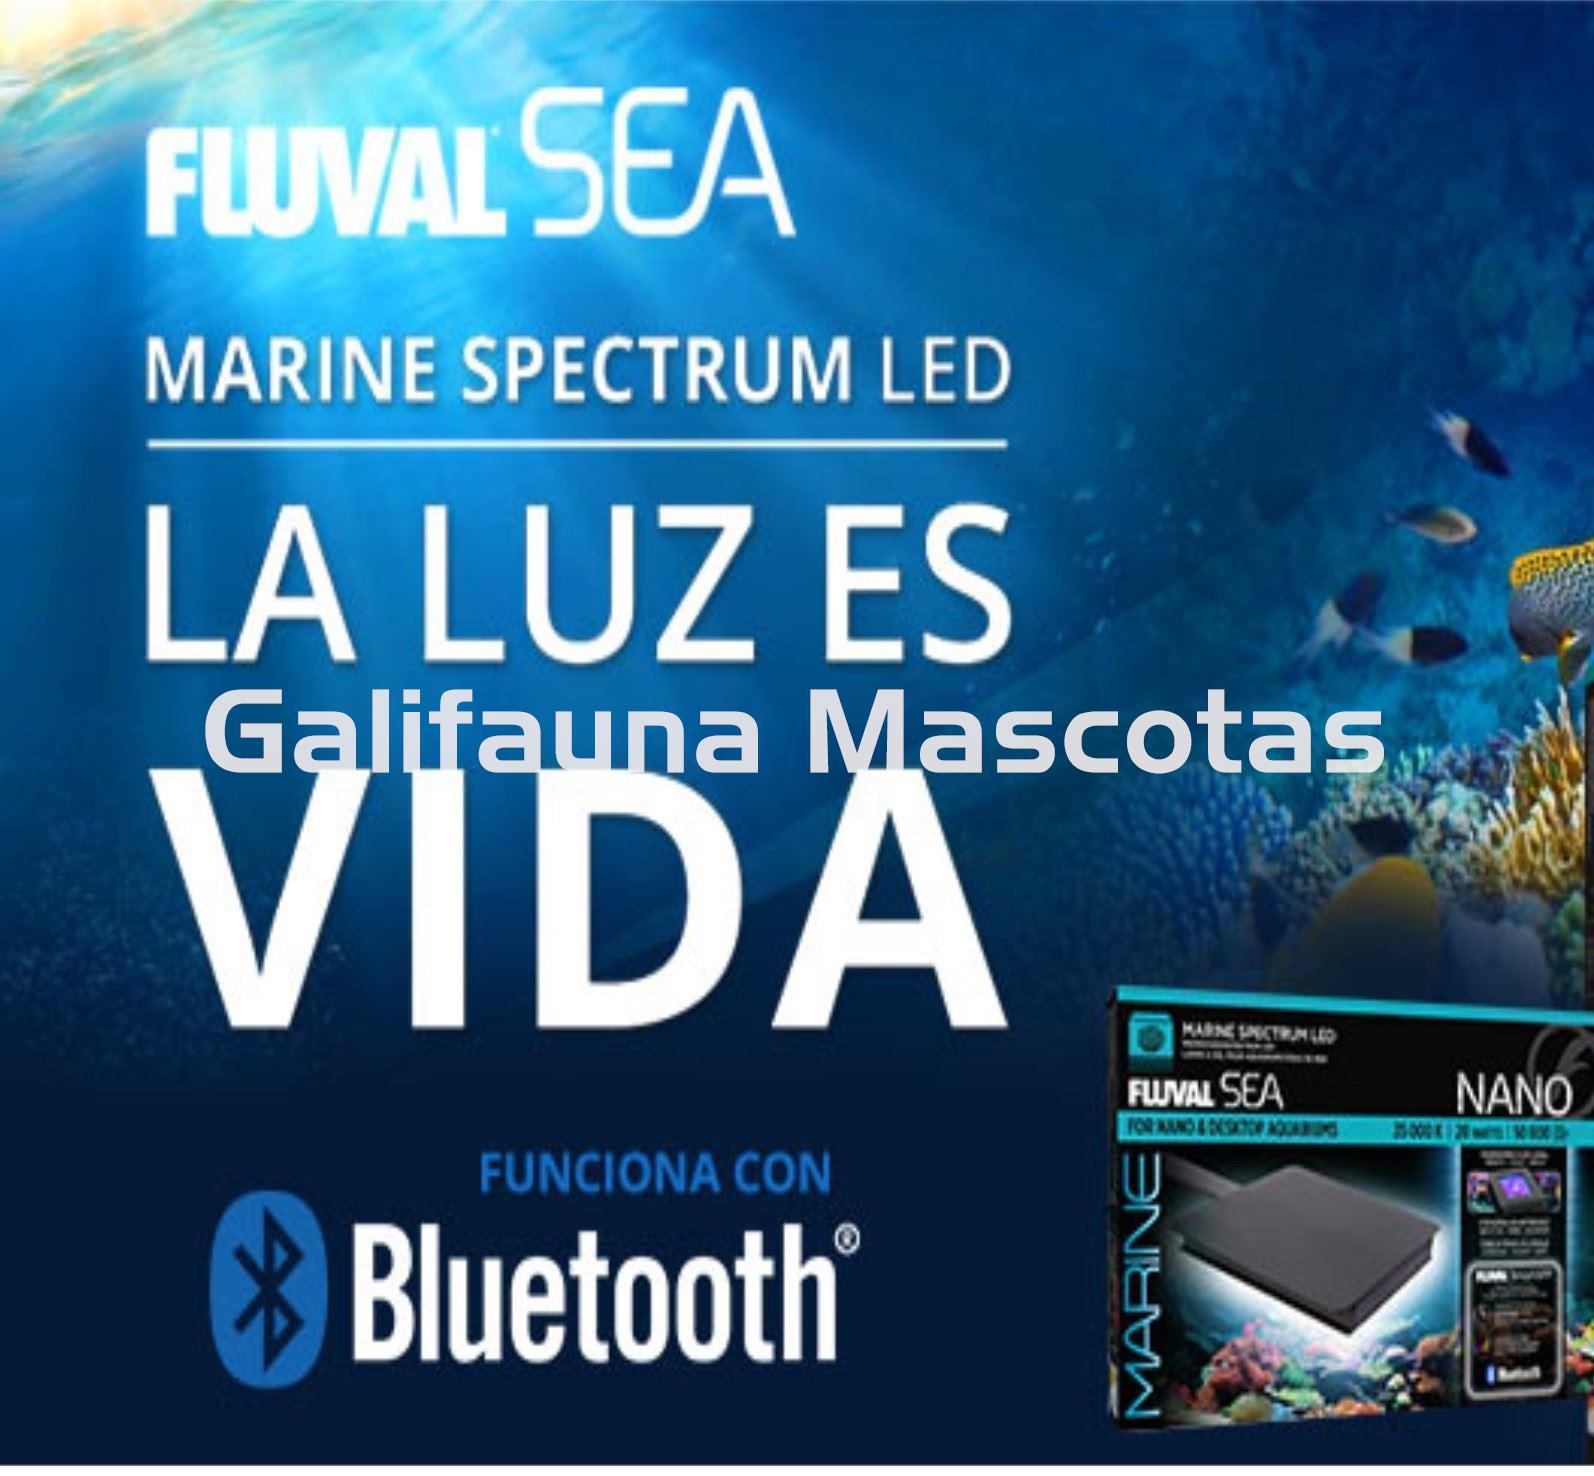 PANTALLA LED BLUETOOTH FLUVAL SEA MARINE SPECTRUM 3.0. Marino. APP Fluval. Brazos extensibles. - Imagen 8